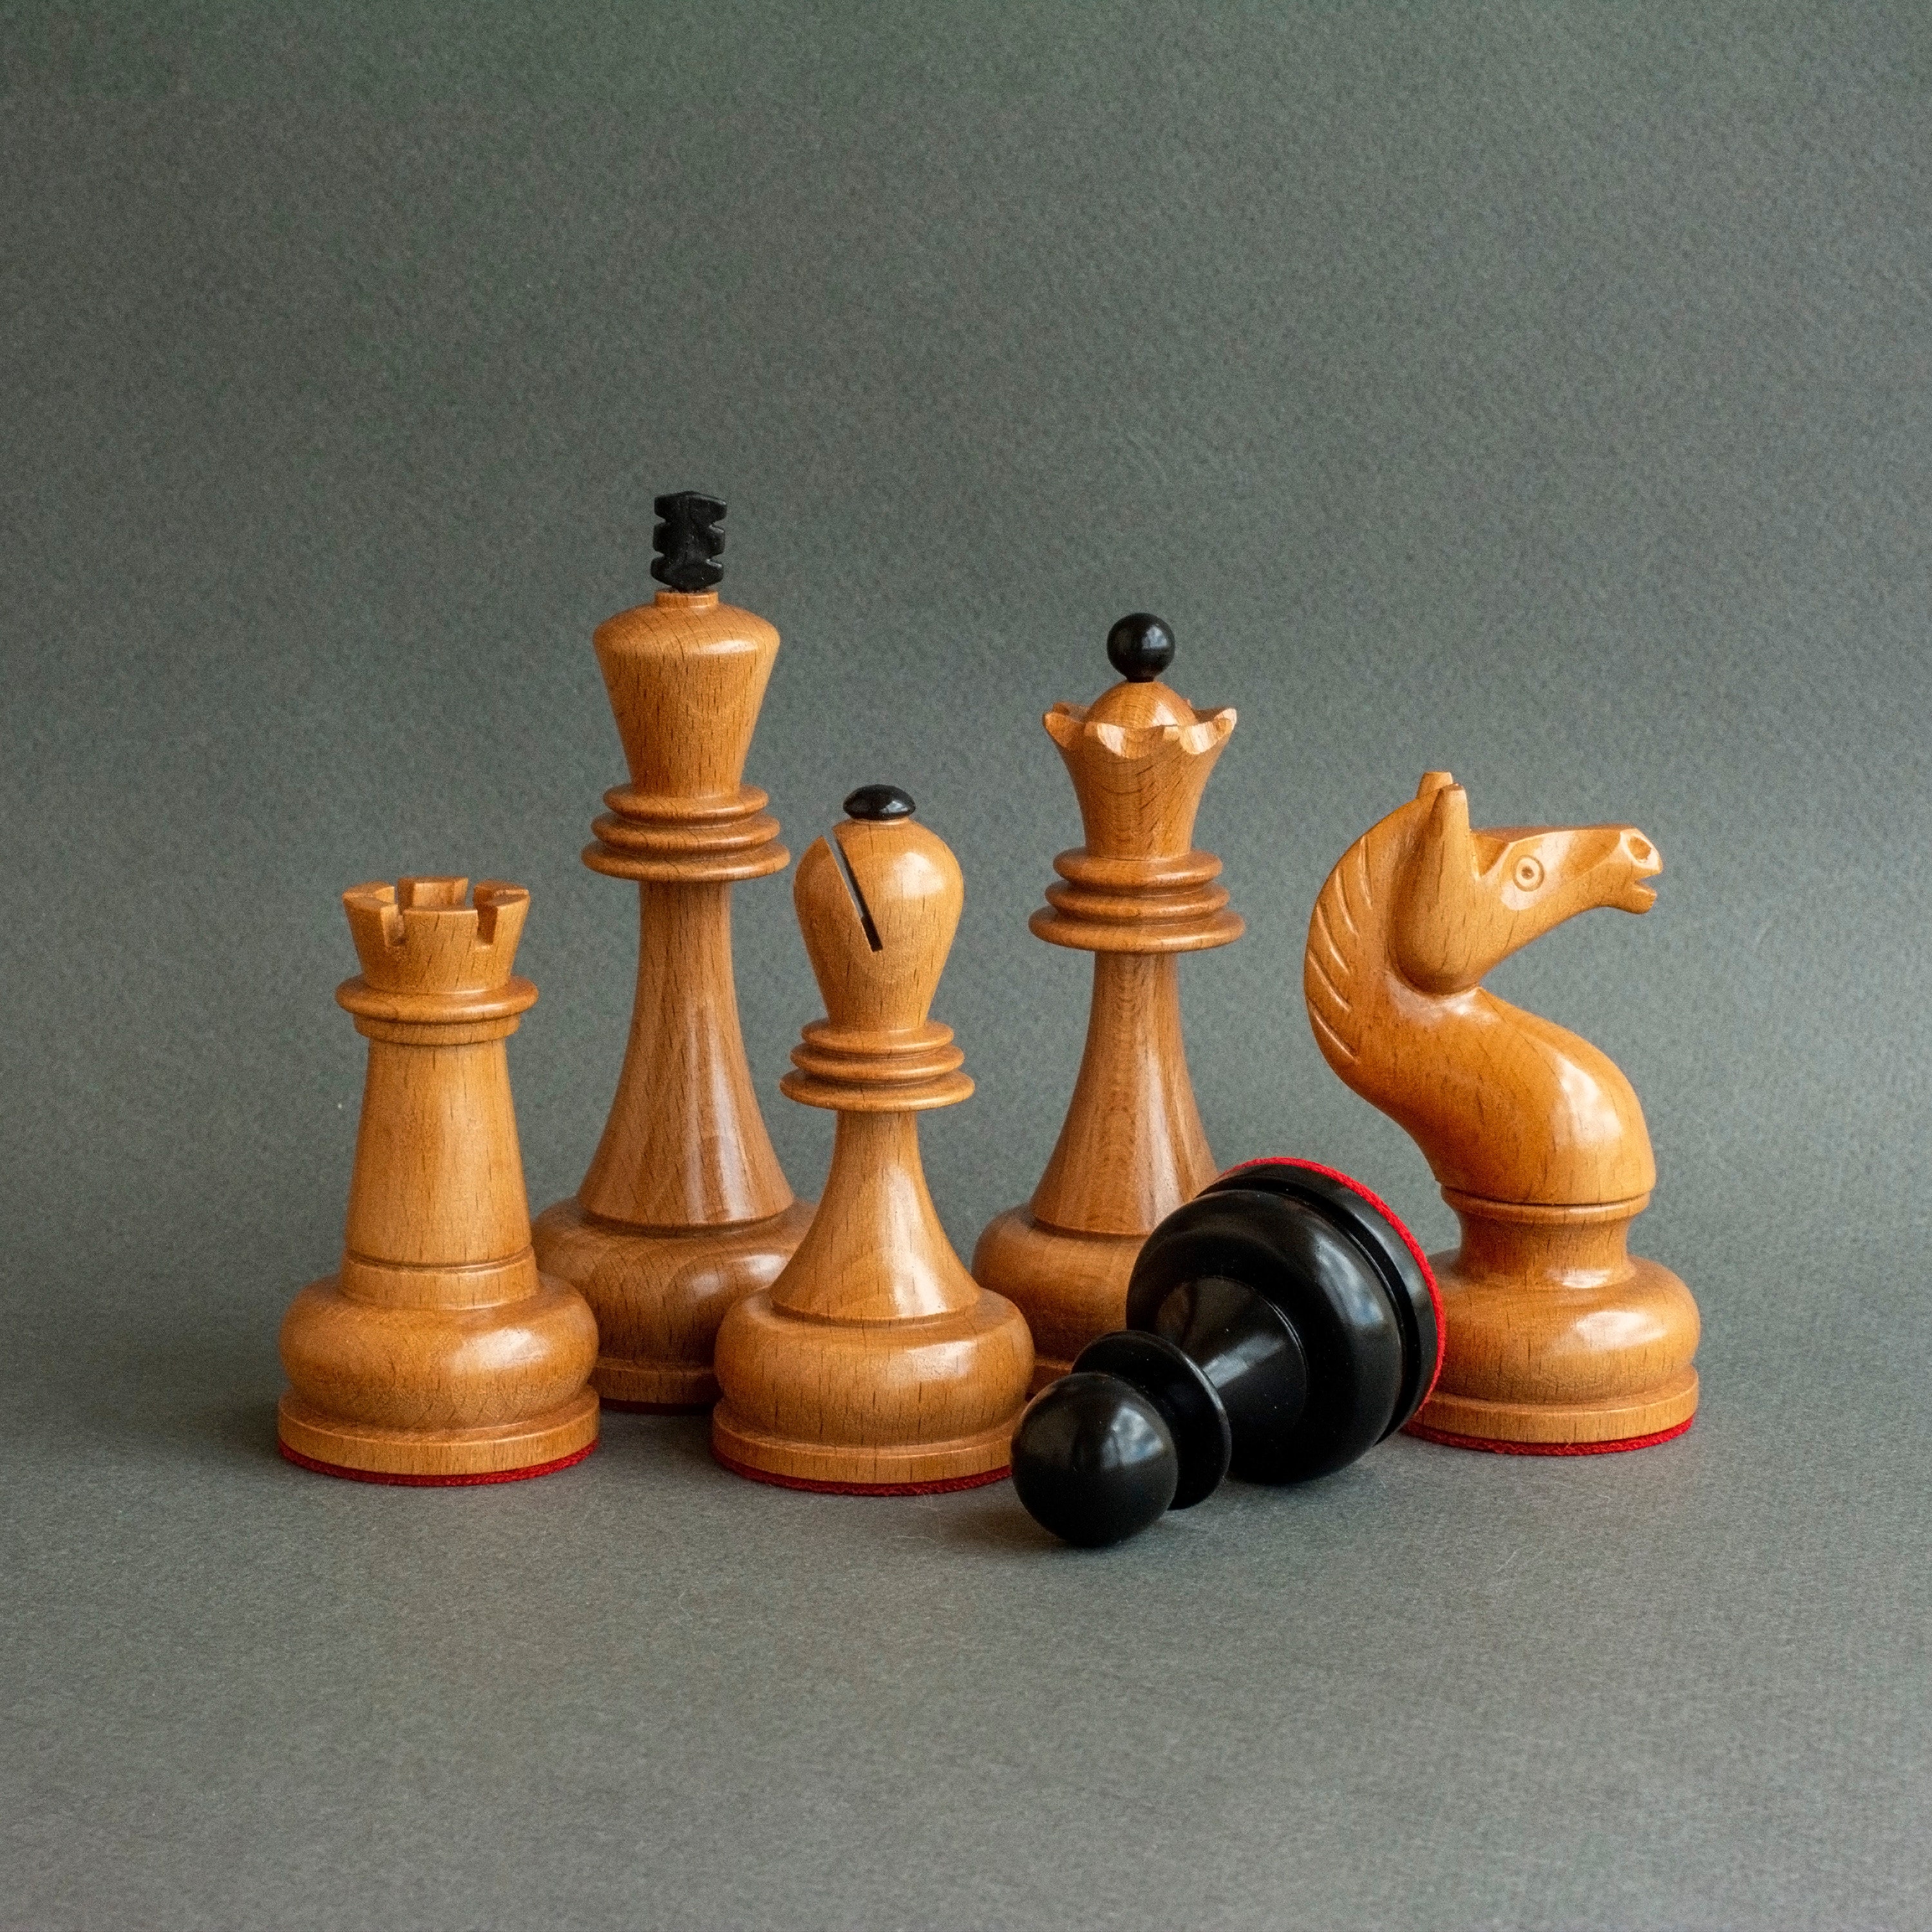 Soviet wooden chess board medium size - 40 cm vintage foldin - Inspire  Uplift